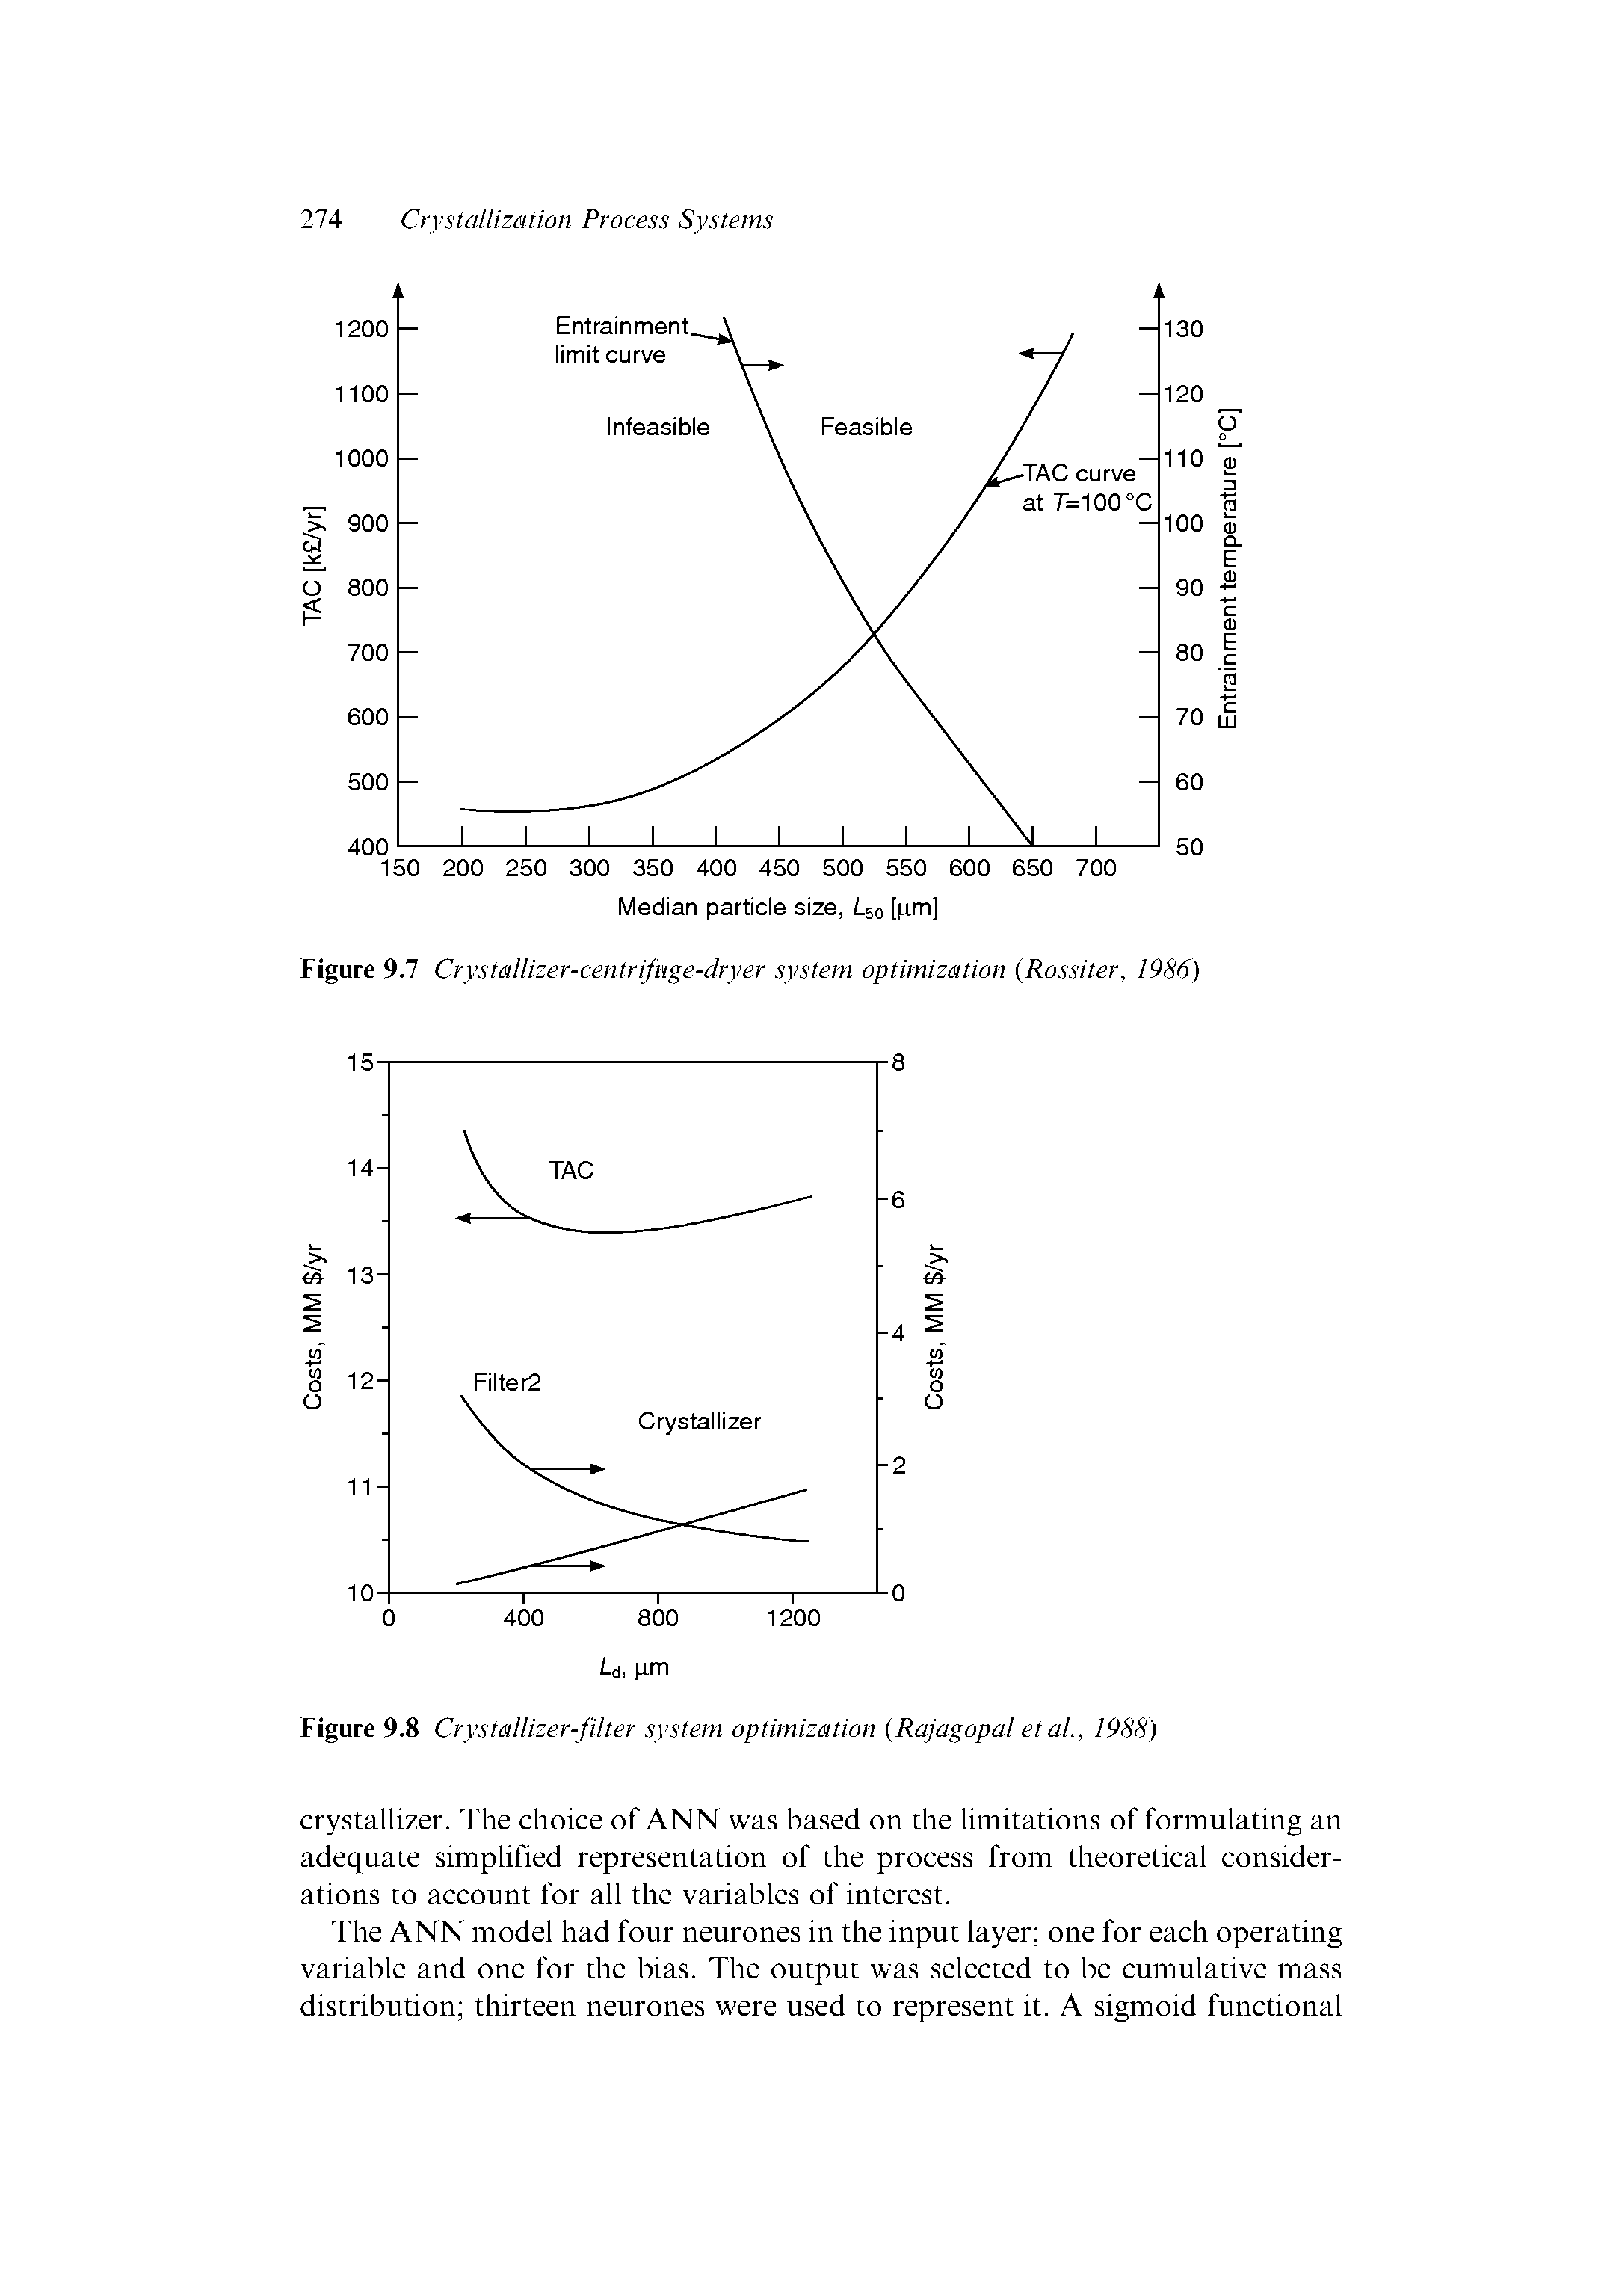 Figure 9.8 Crystallizer-filter system optimization (Rajagopal etal., 1988)...